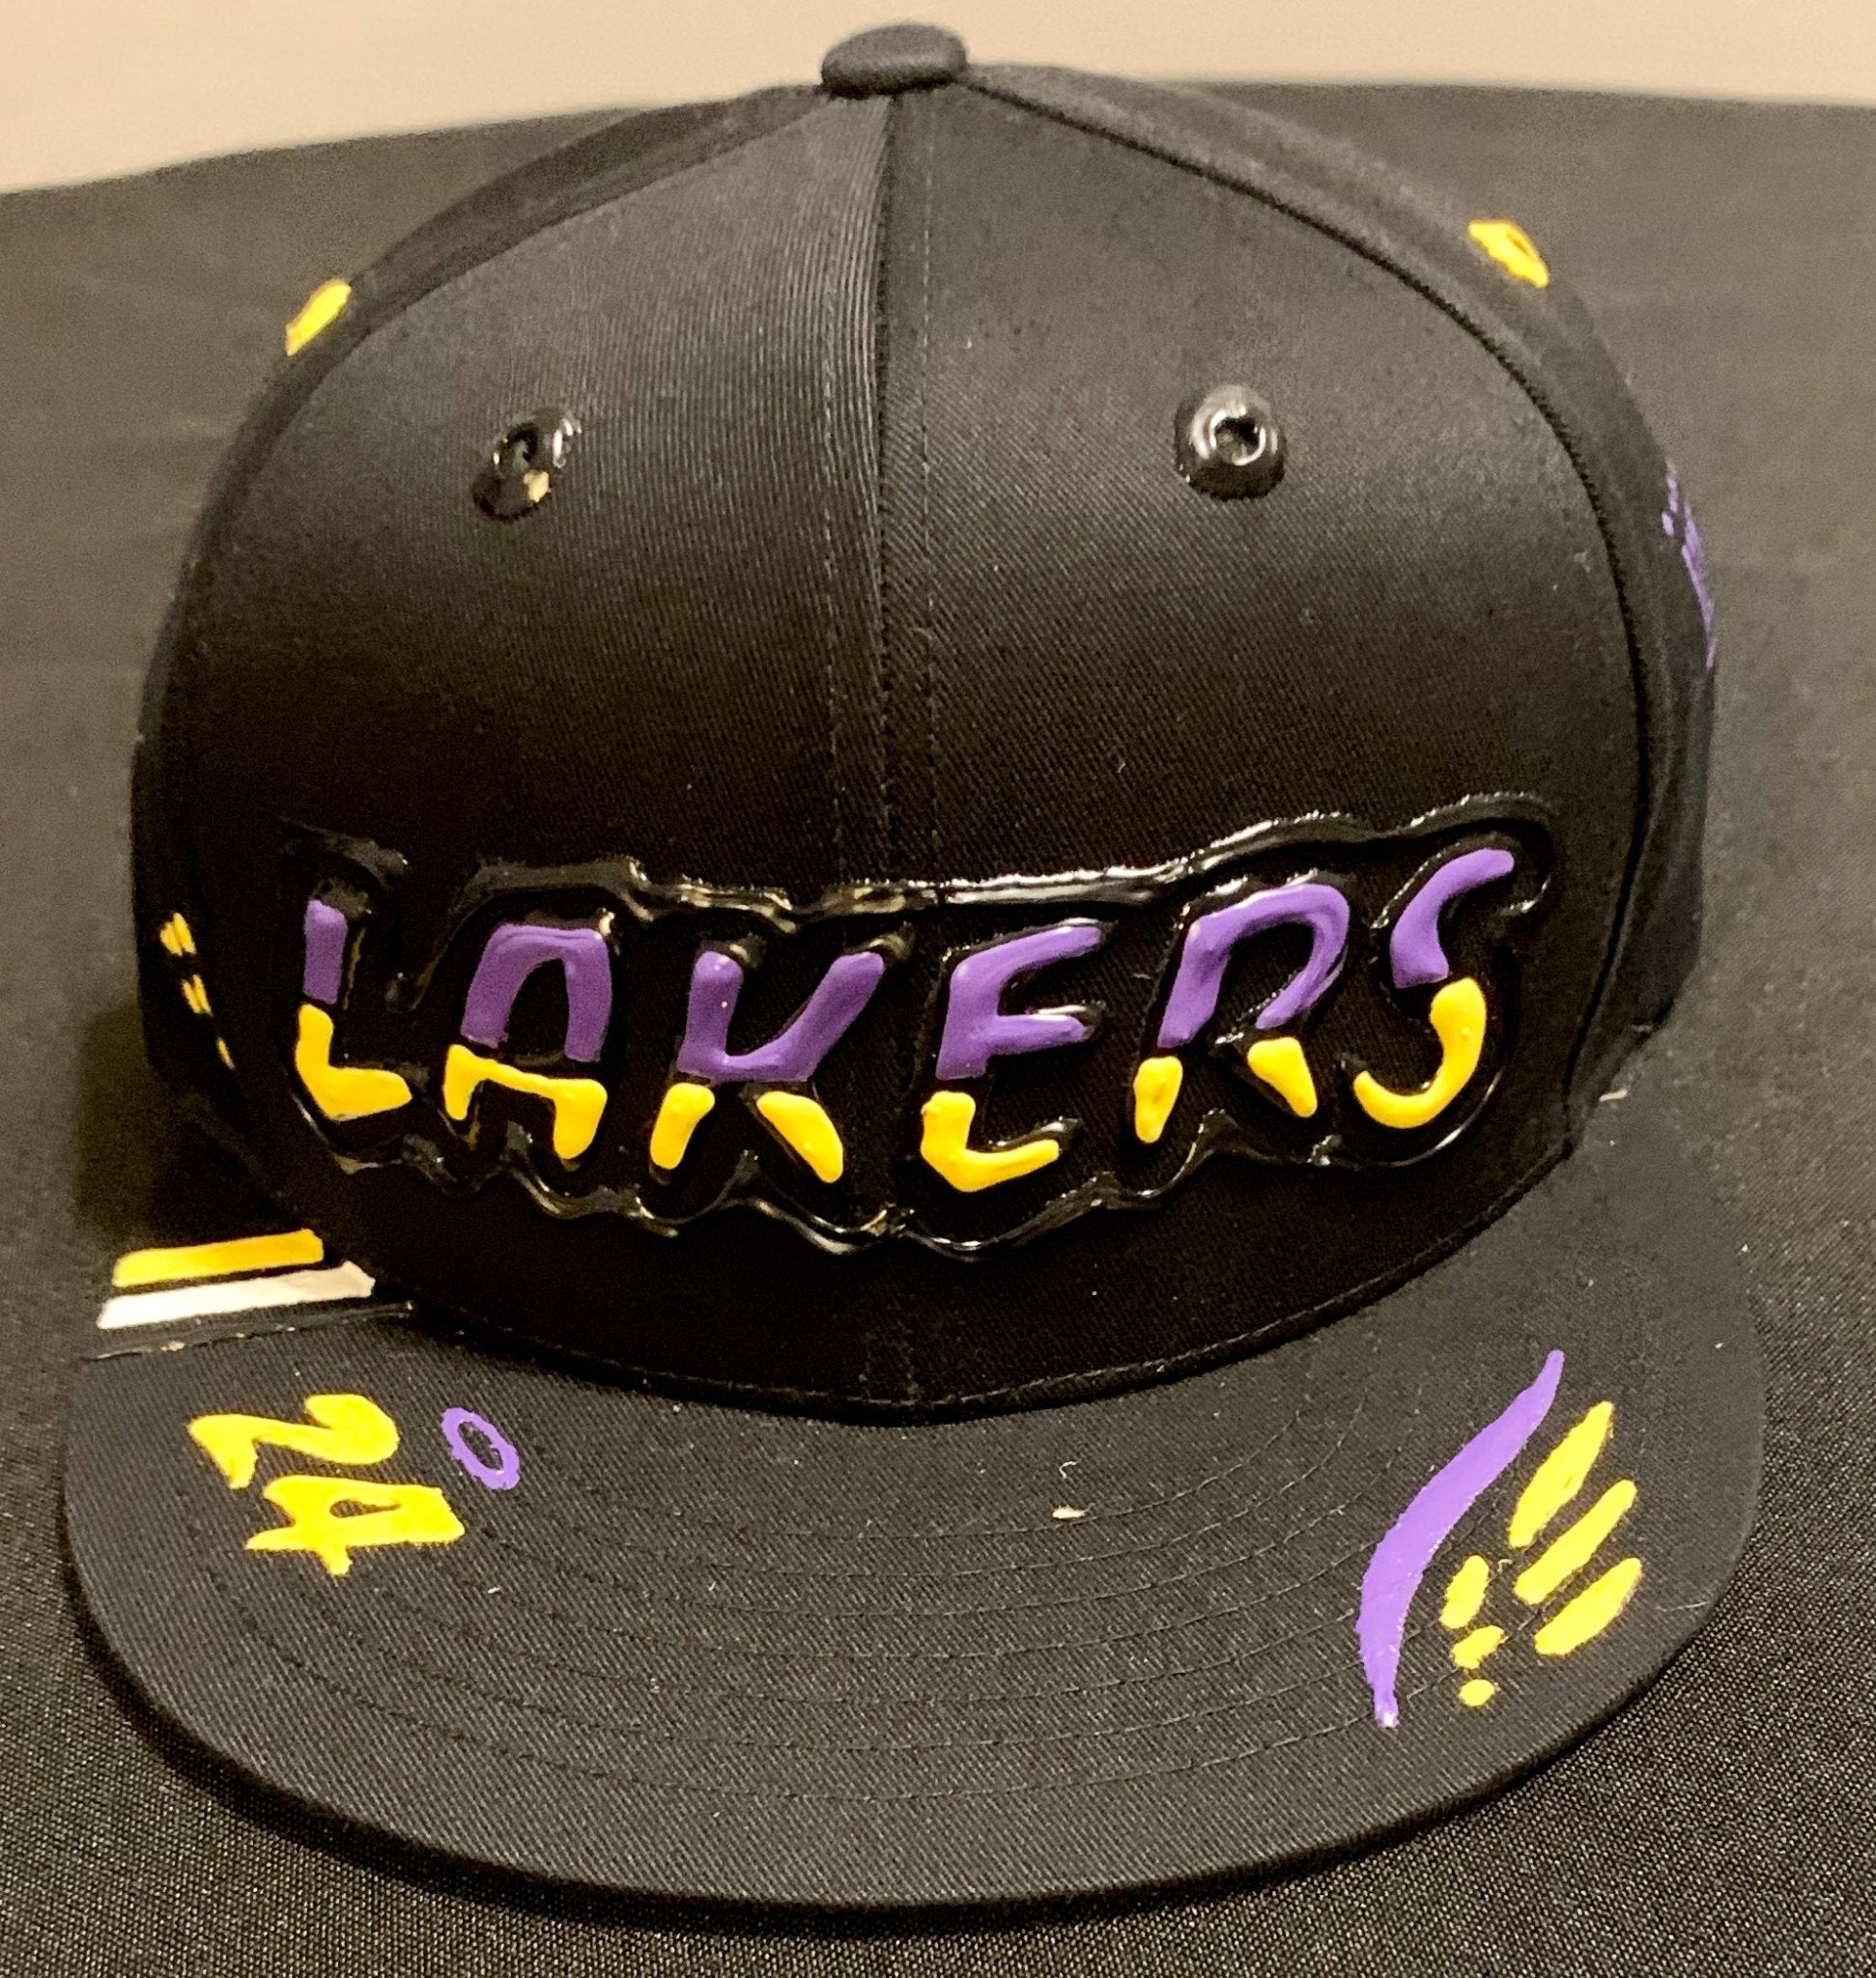 Black La Lakers 24 Hat